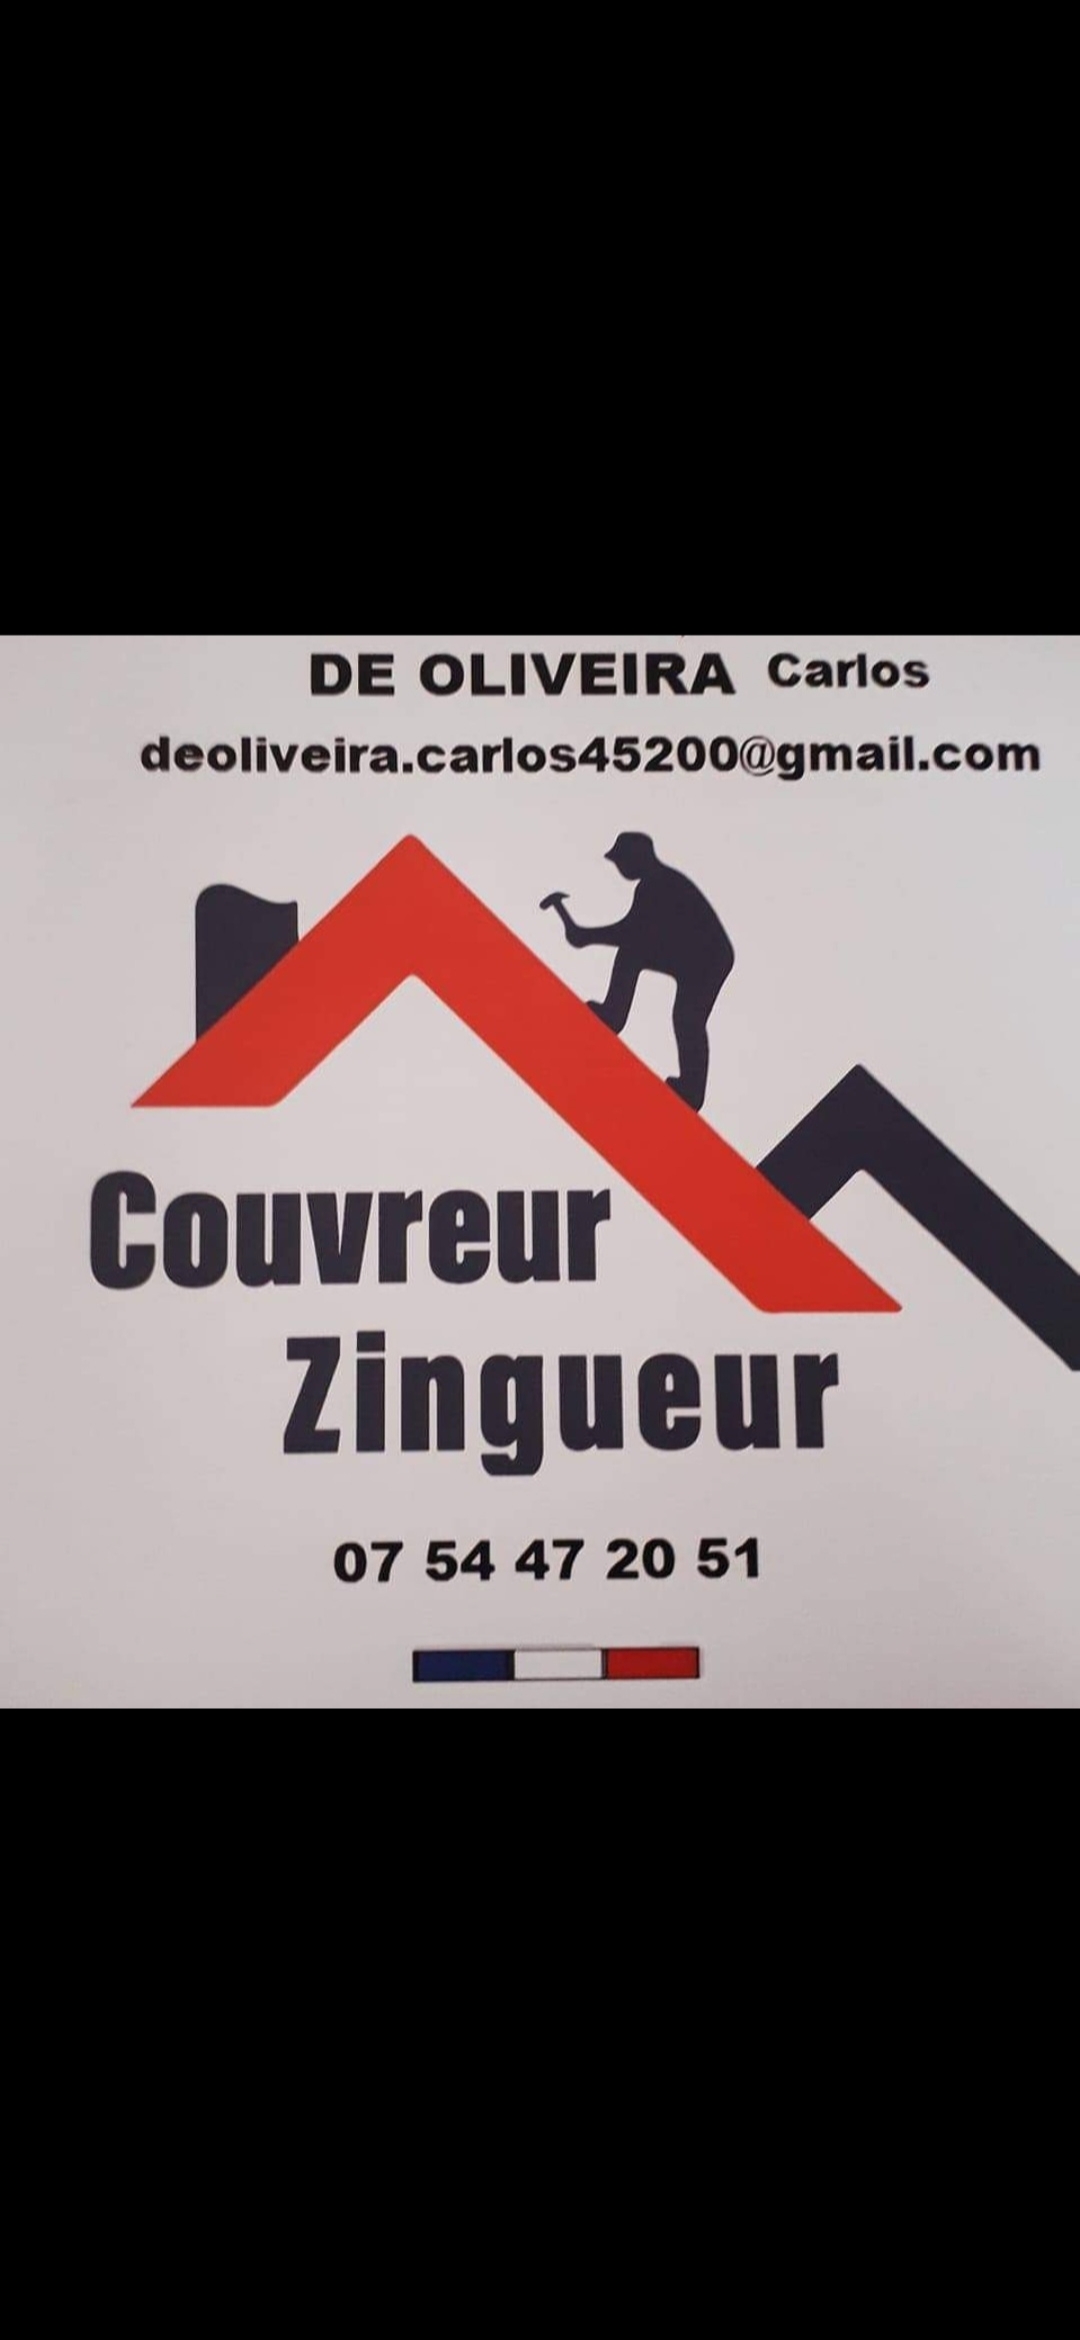 Logo de De oliveira carlos-albert, société de travaux en Ramonage